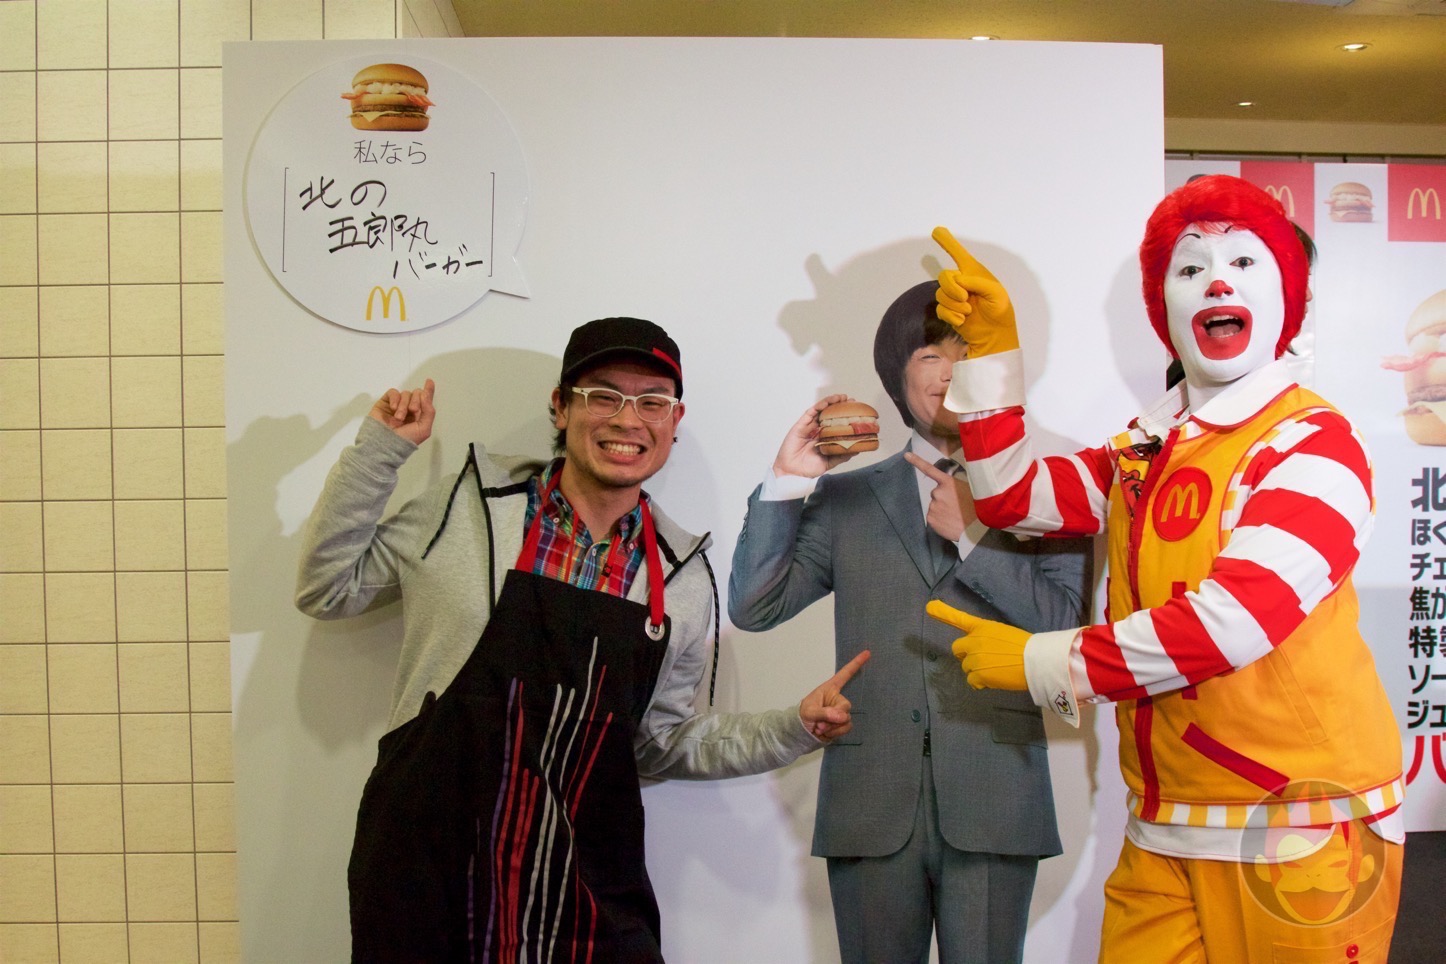 McDonalds-New-Burger-With-No-Name-13.jpg